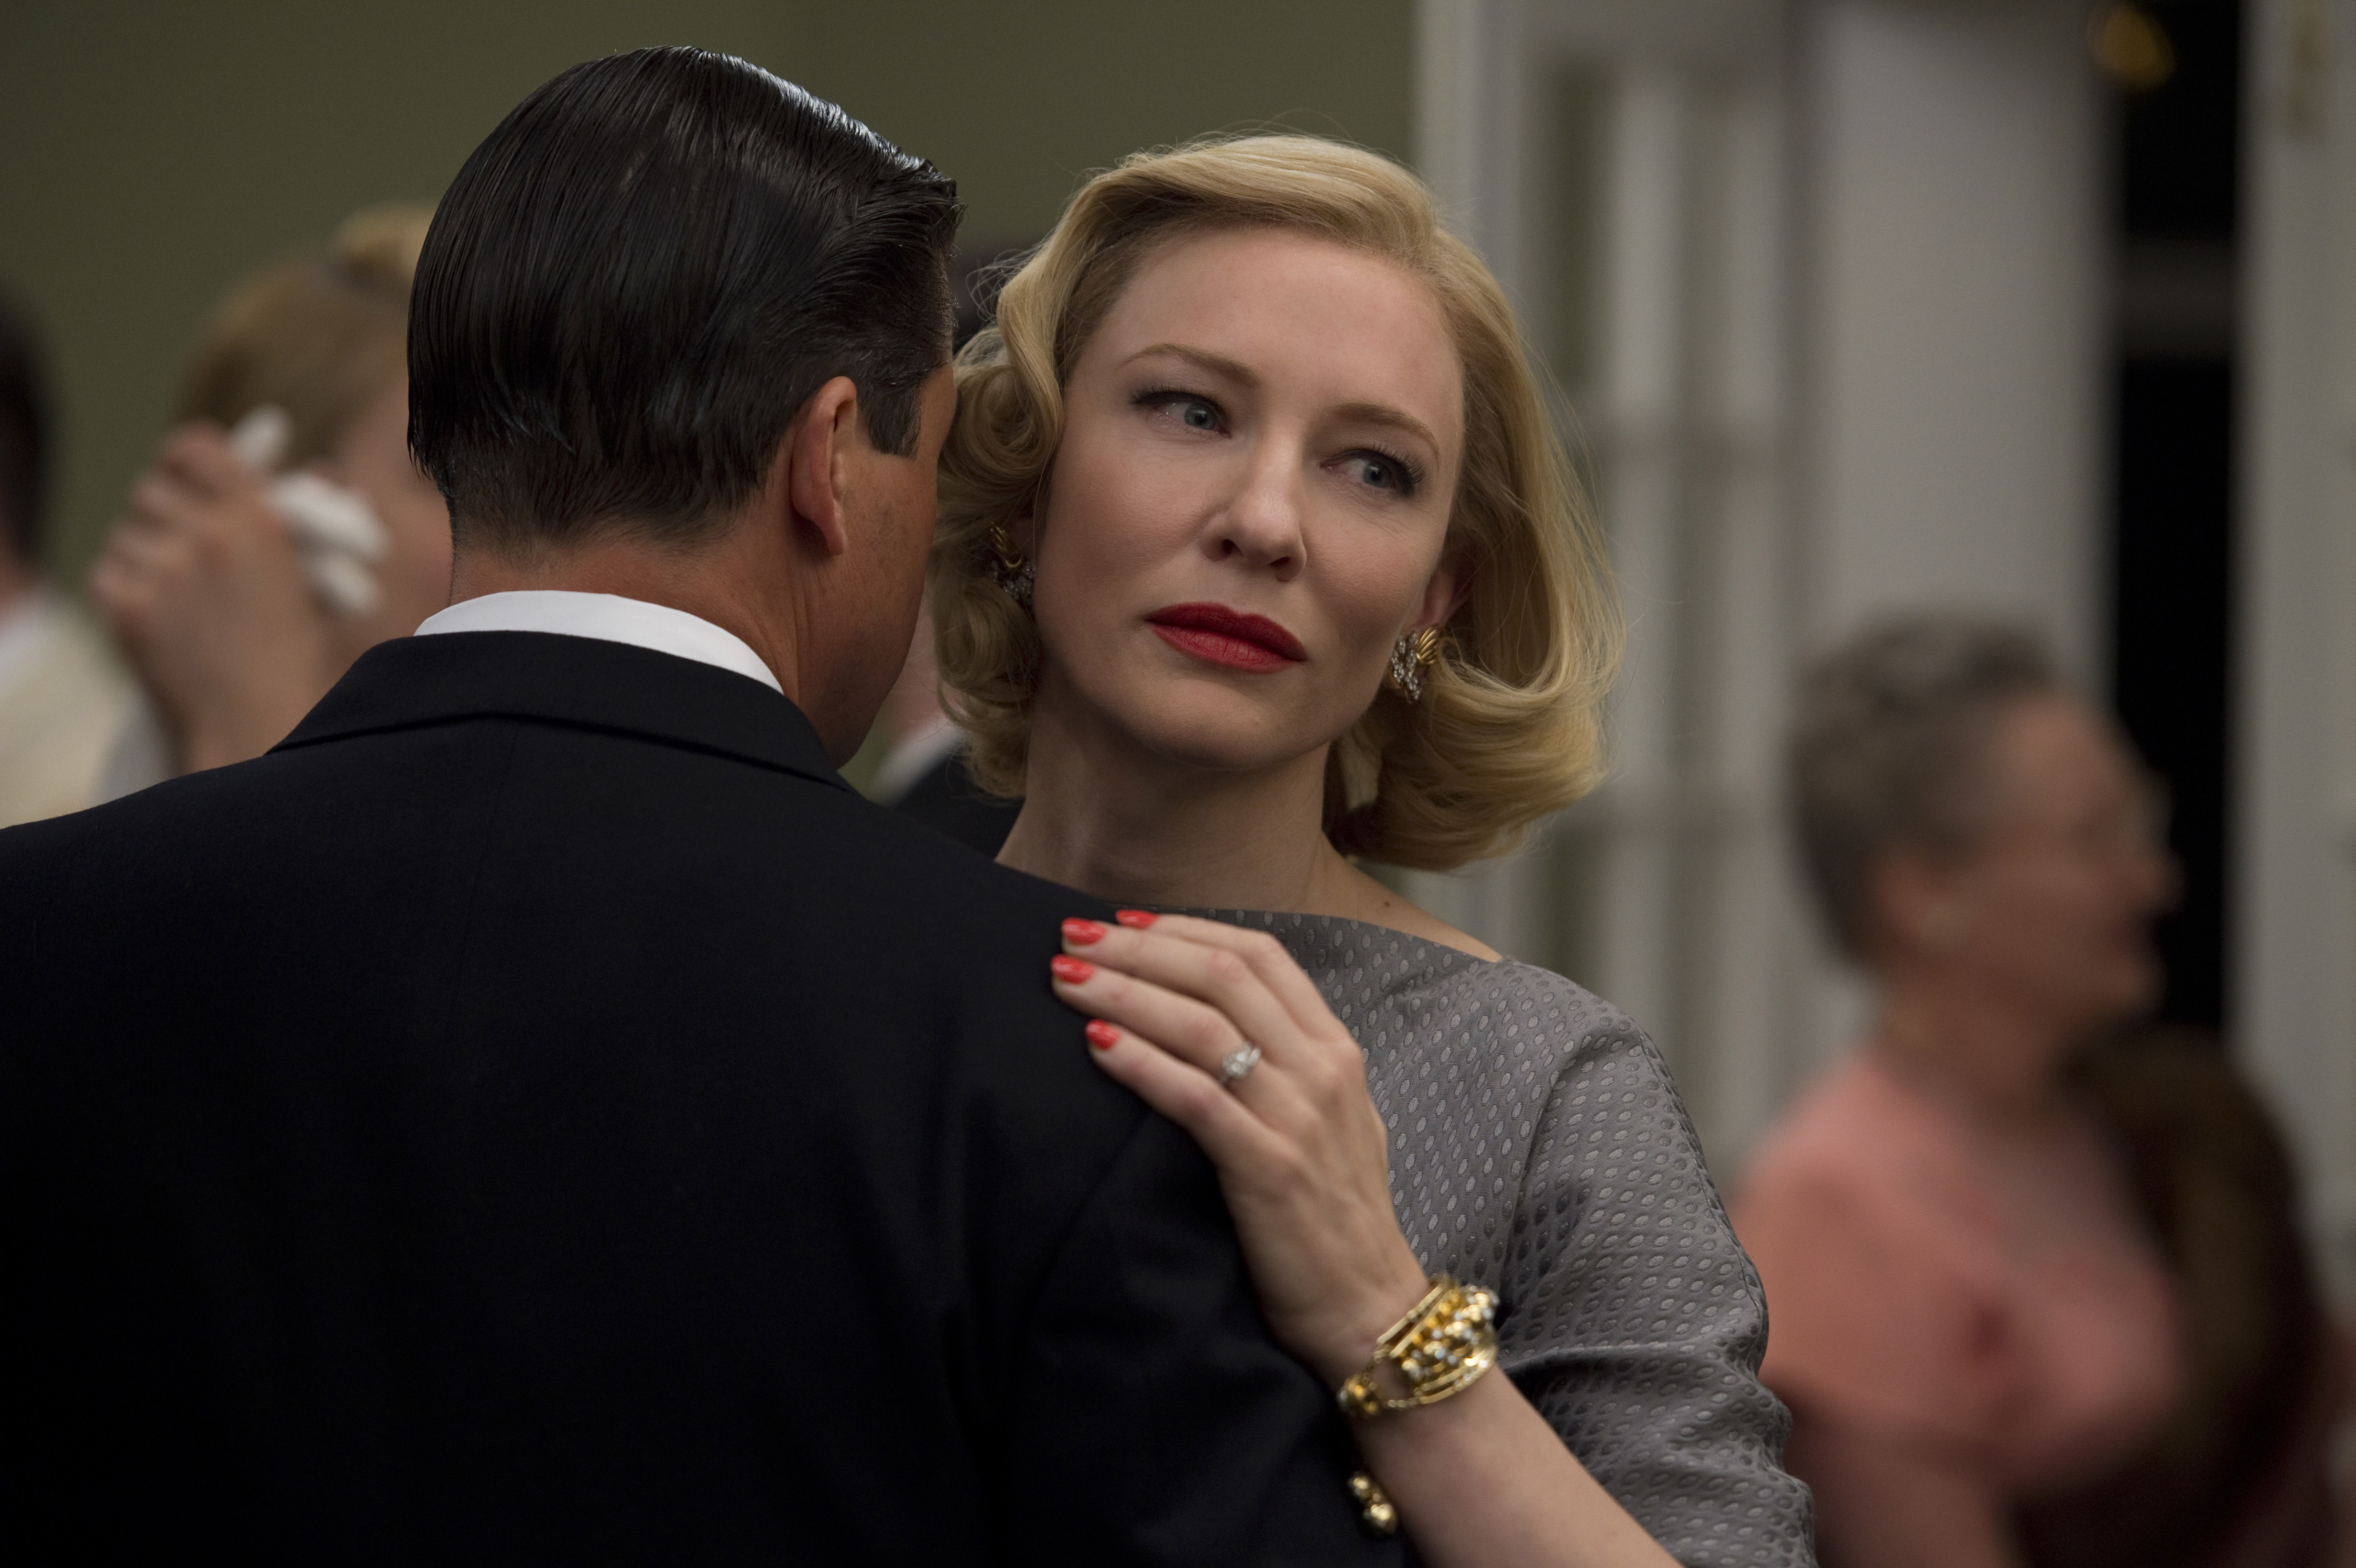 Still of Cate Blanchett and Kyle Chandler in Carol (2015)